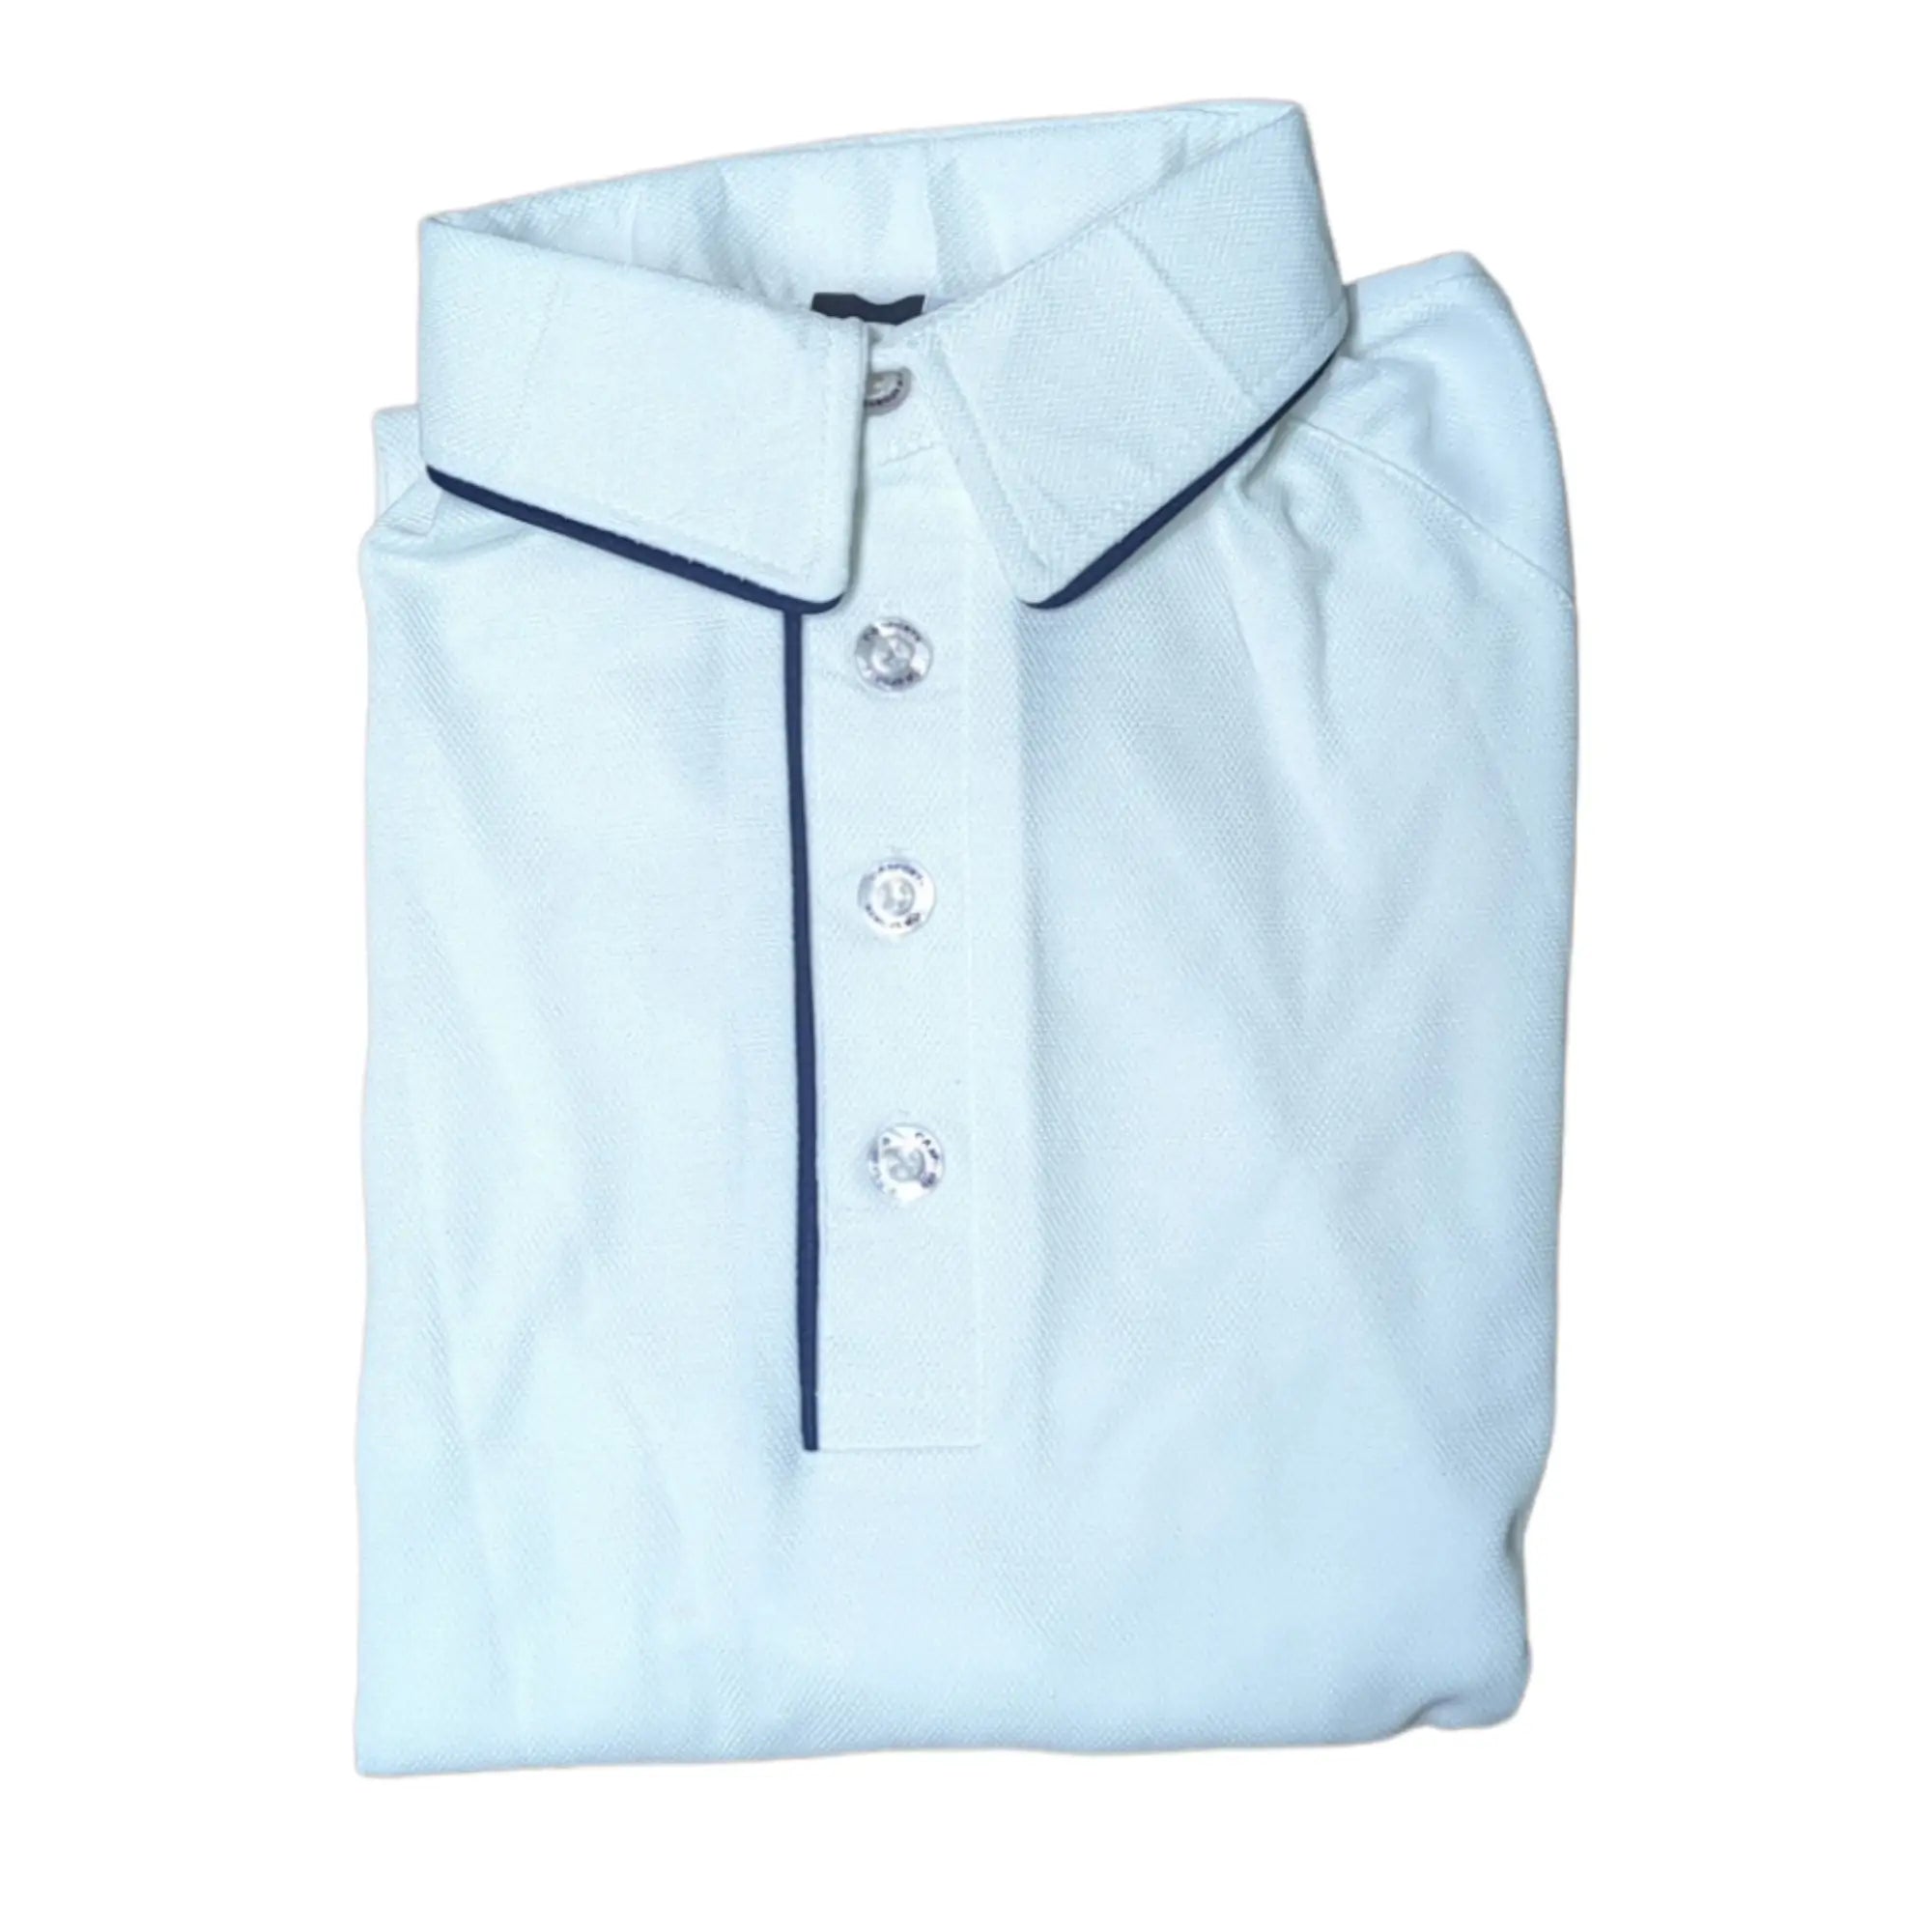 CA Gold White Navy Trim Cricket Shirt 3/4 Sleeves - CLOTHING - SHIRT